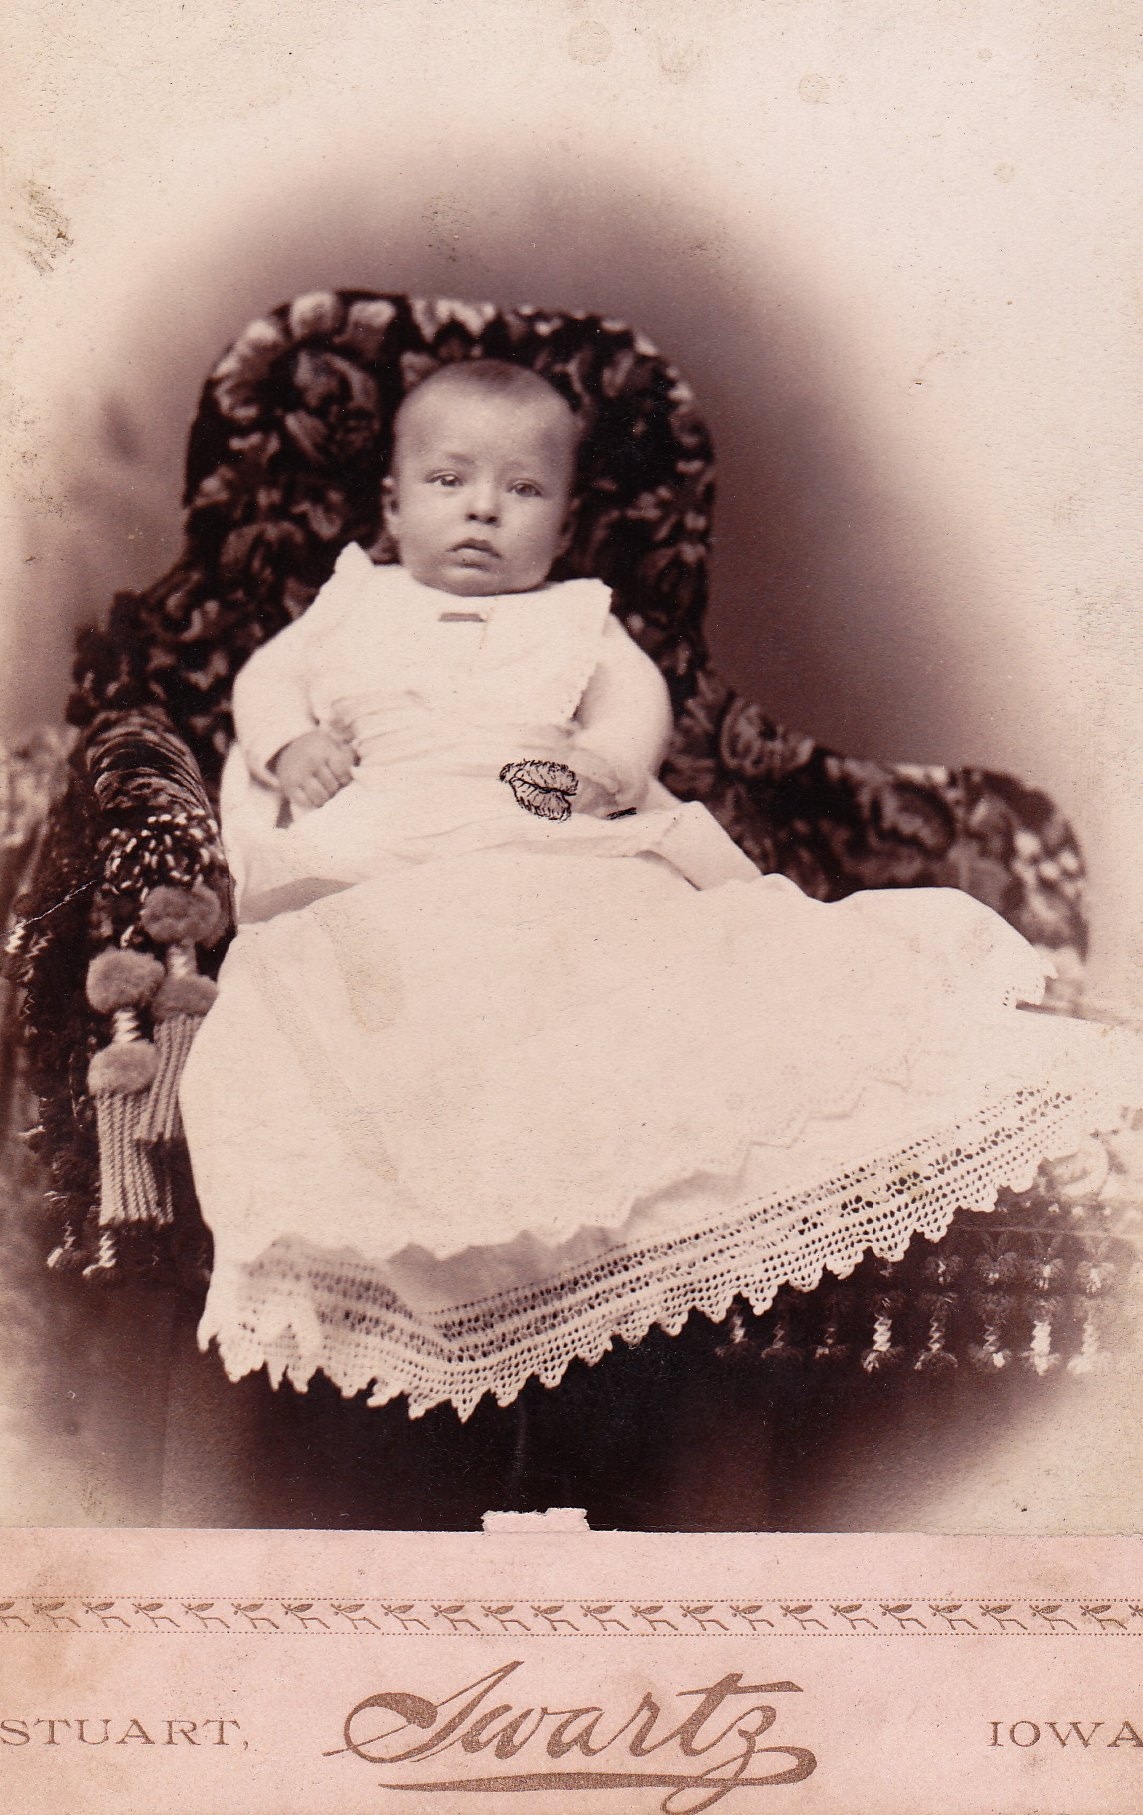 Stuart Swartz Iowa - Baby Photo